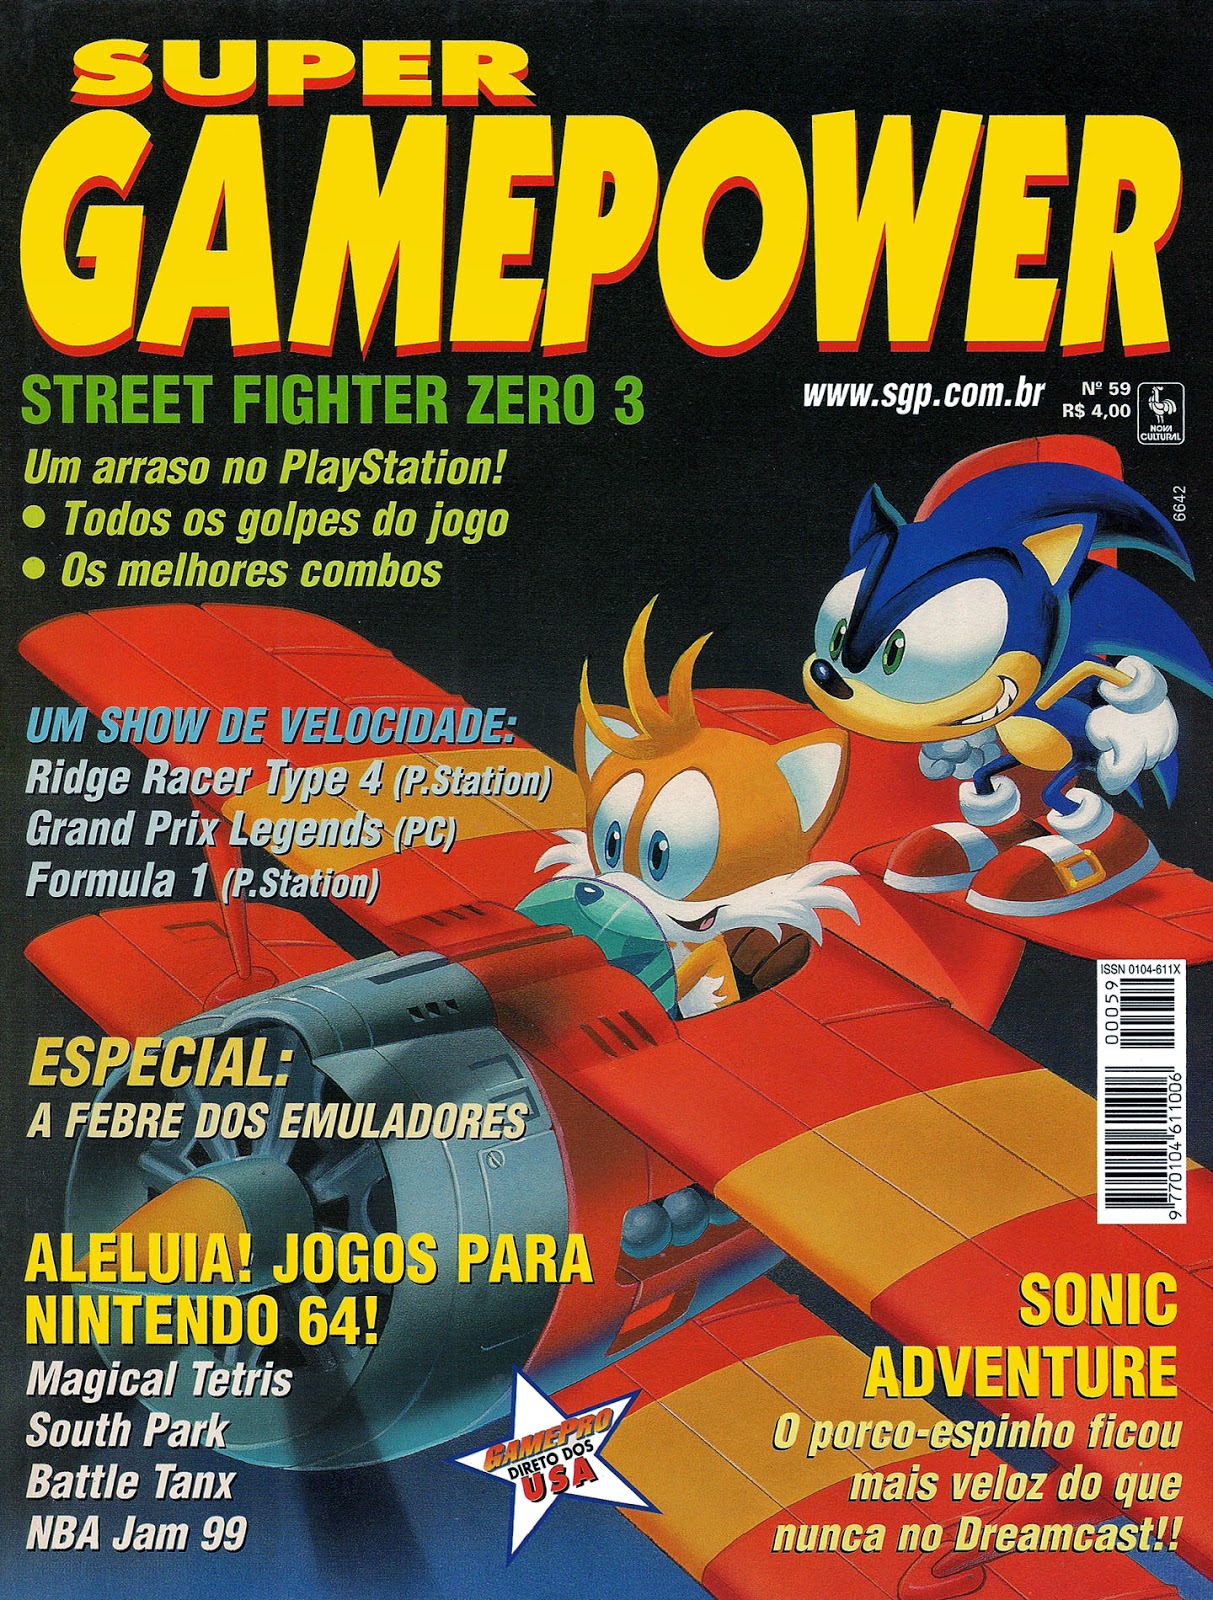 Revista Super Game Power Gold e Silver (GBC) Detonado N. 79 / Ano